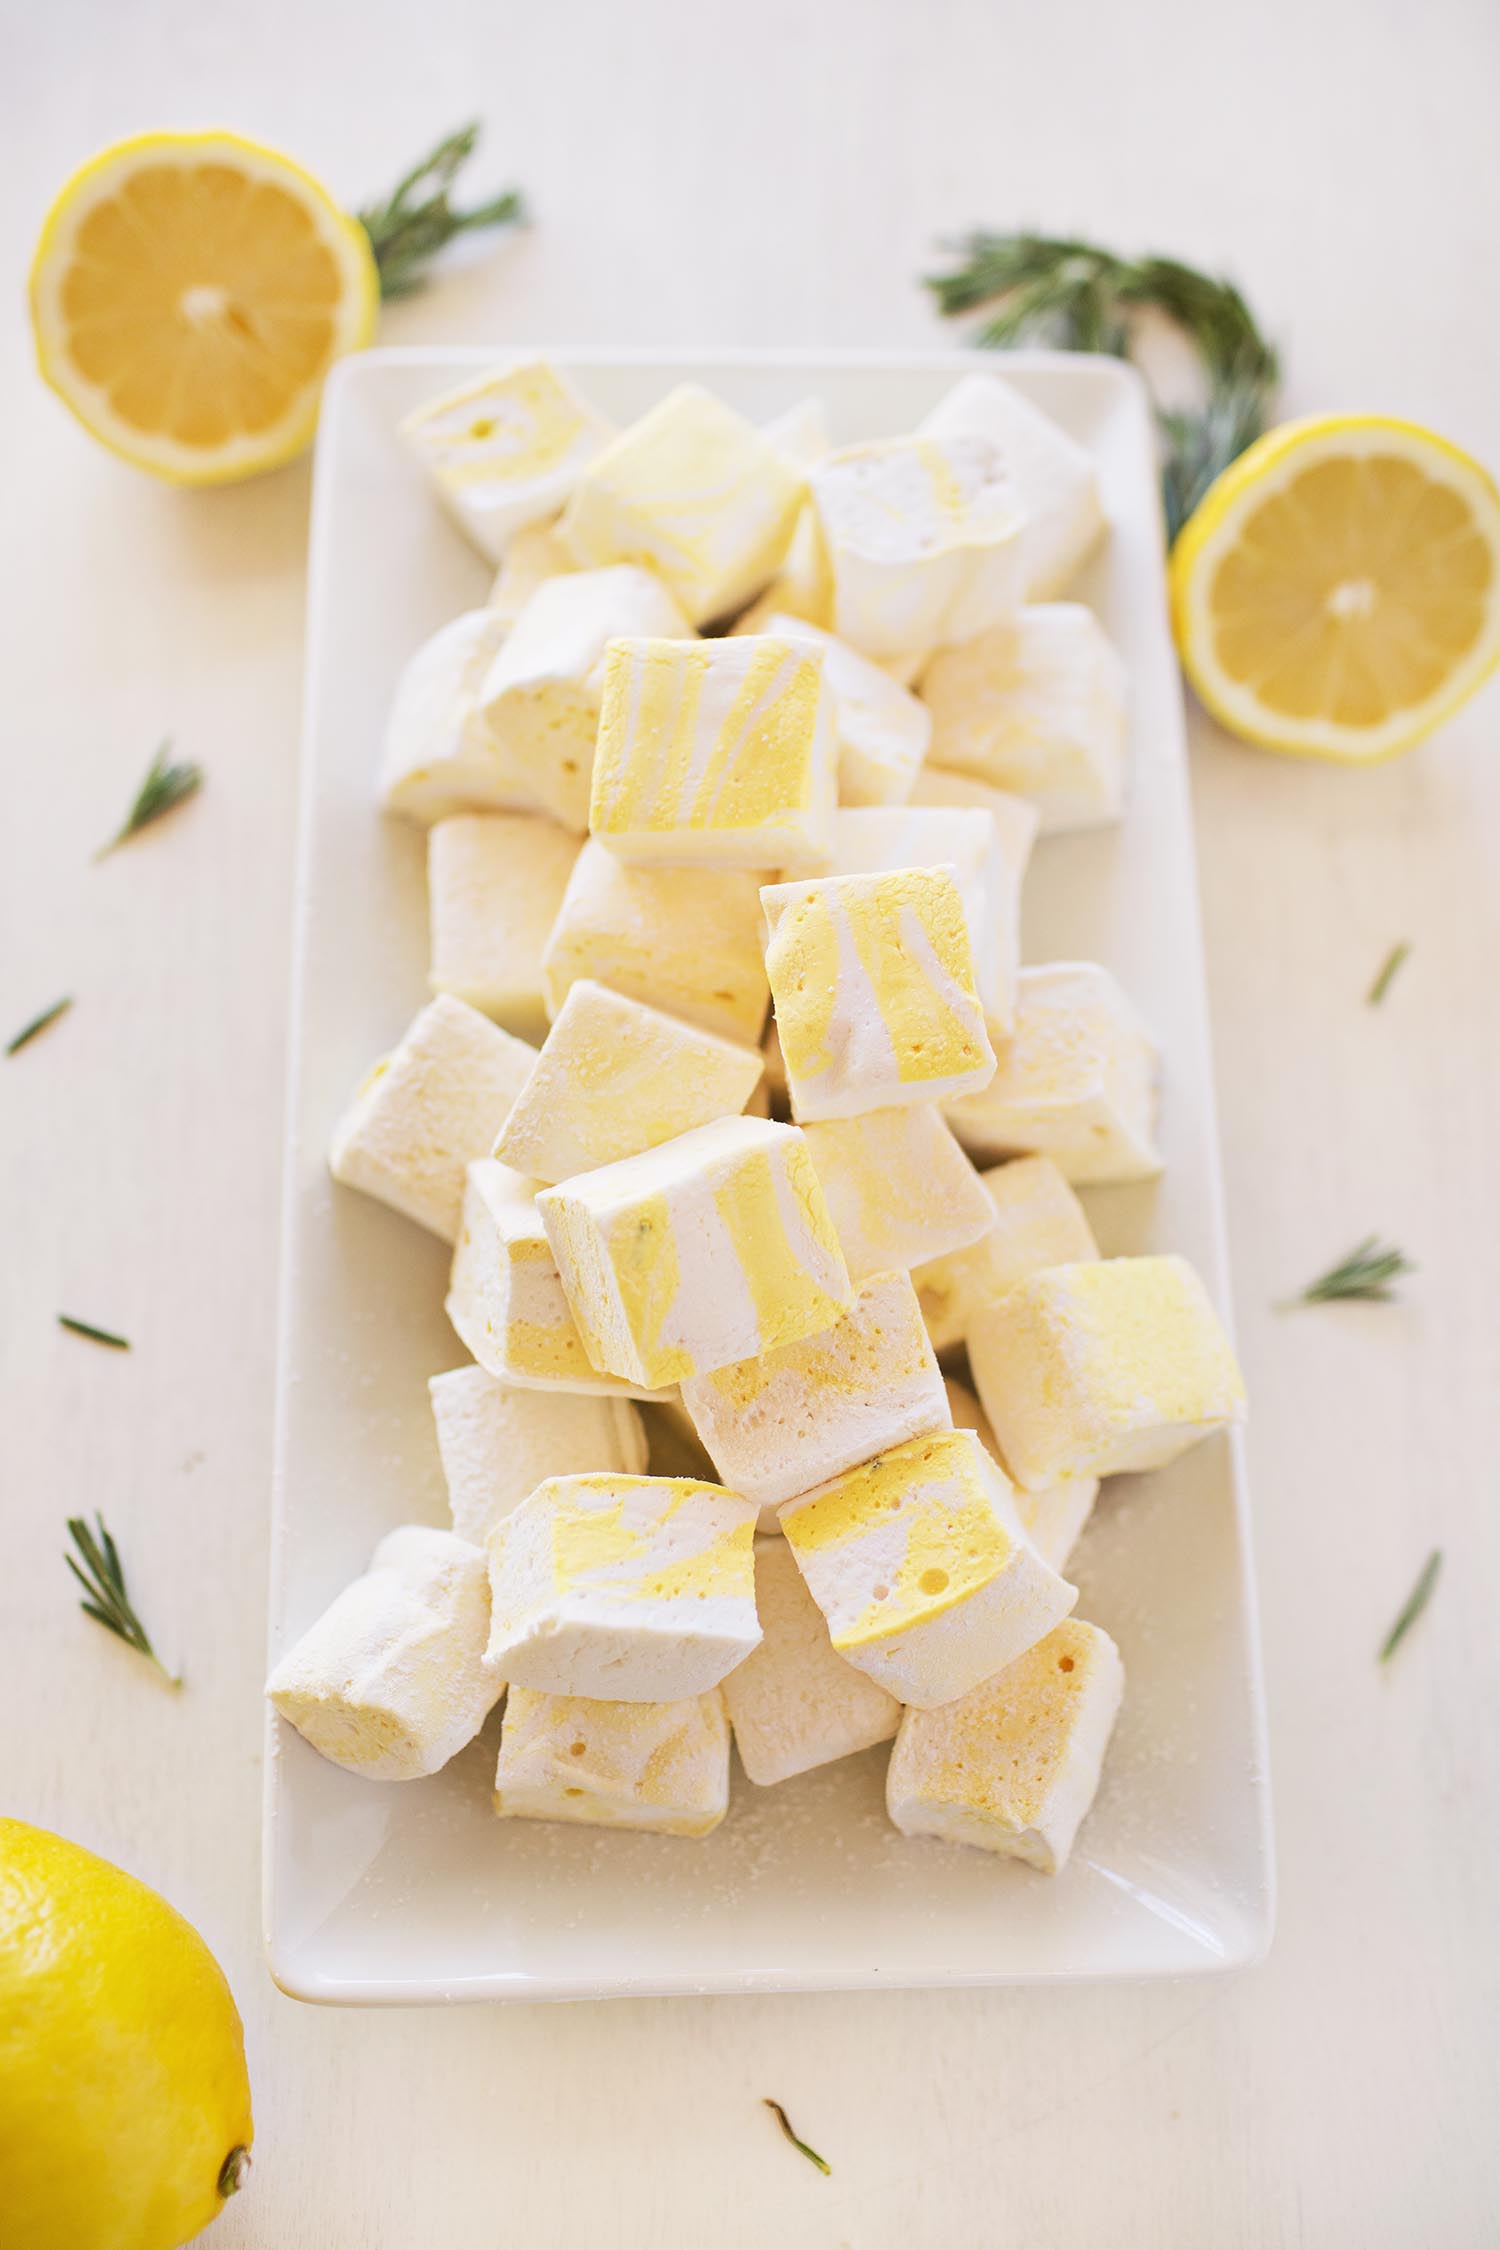 Lemon and Rosemary Marhmallows (via abeautifulmess.com)